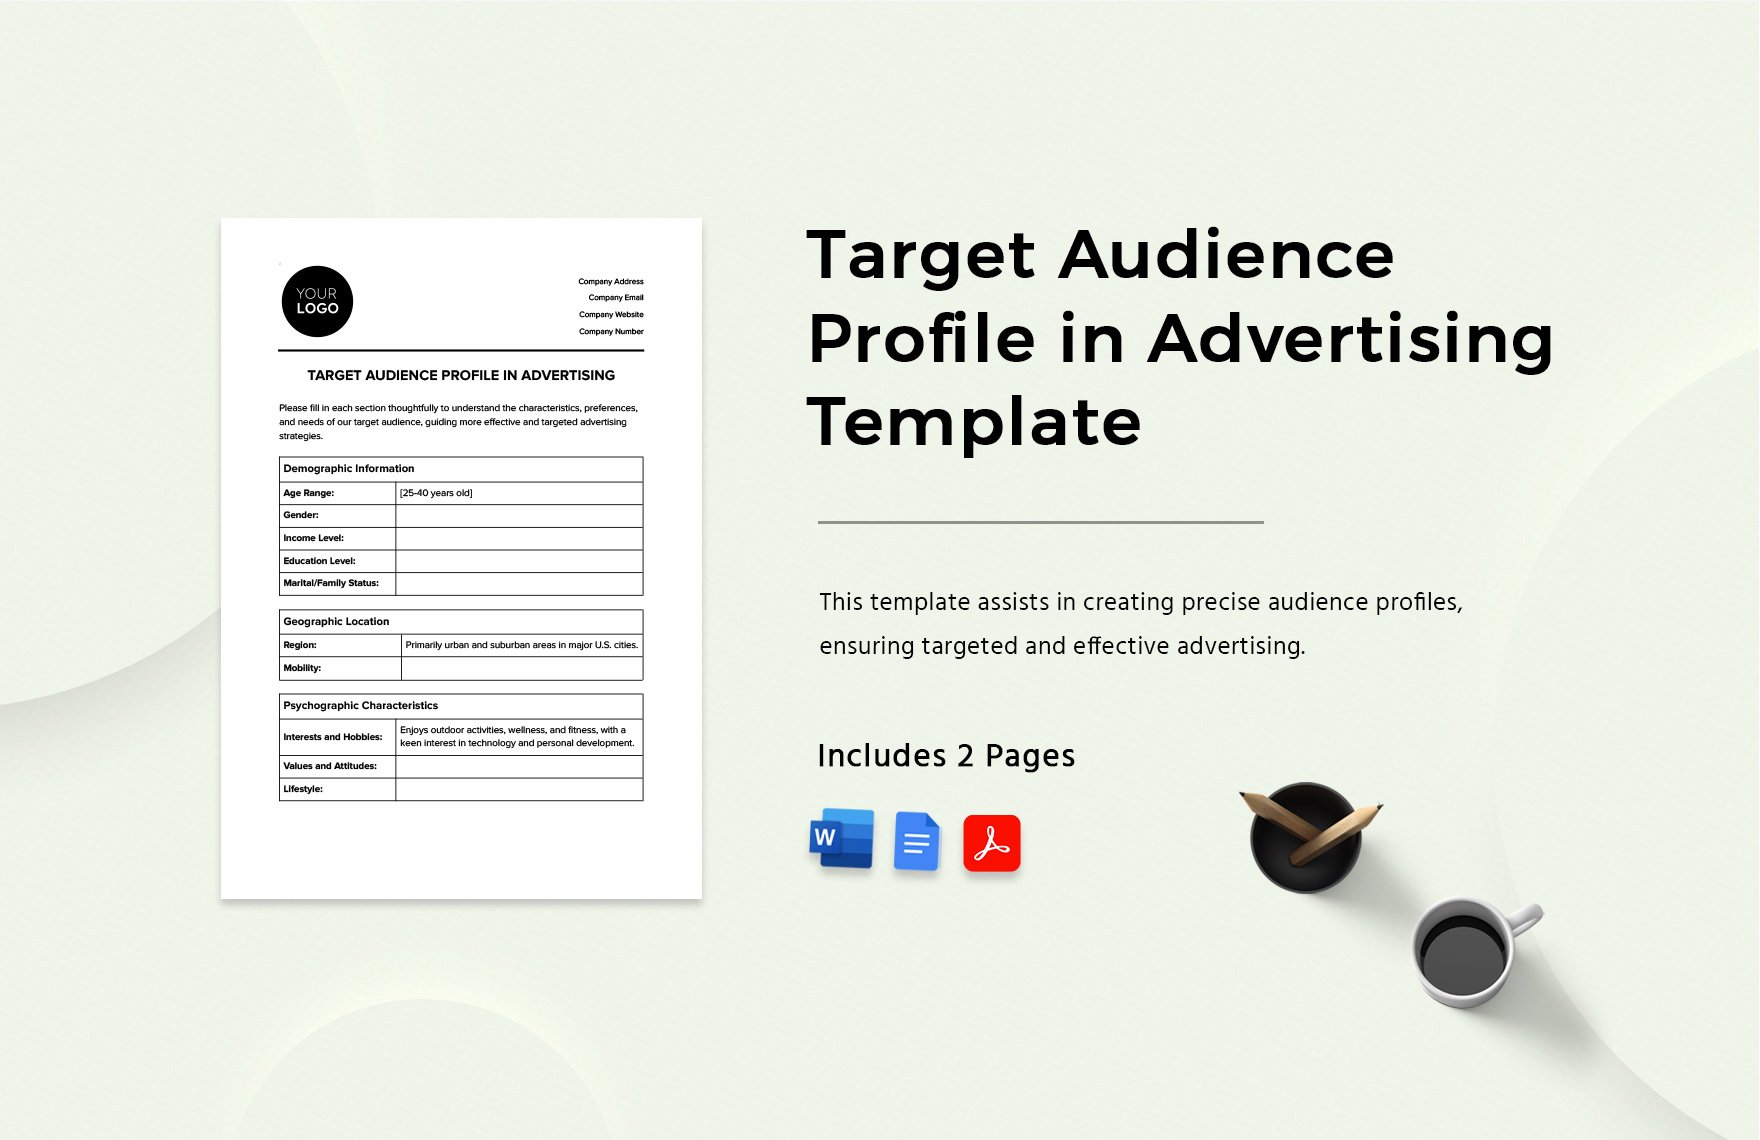 Target Audience Profile in Advertising Template